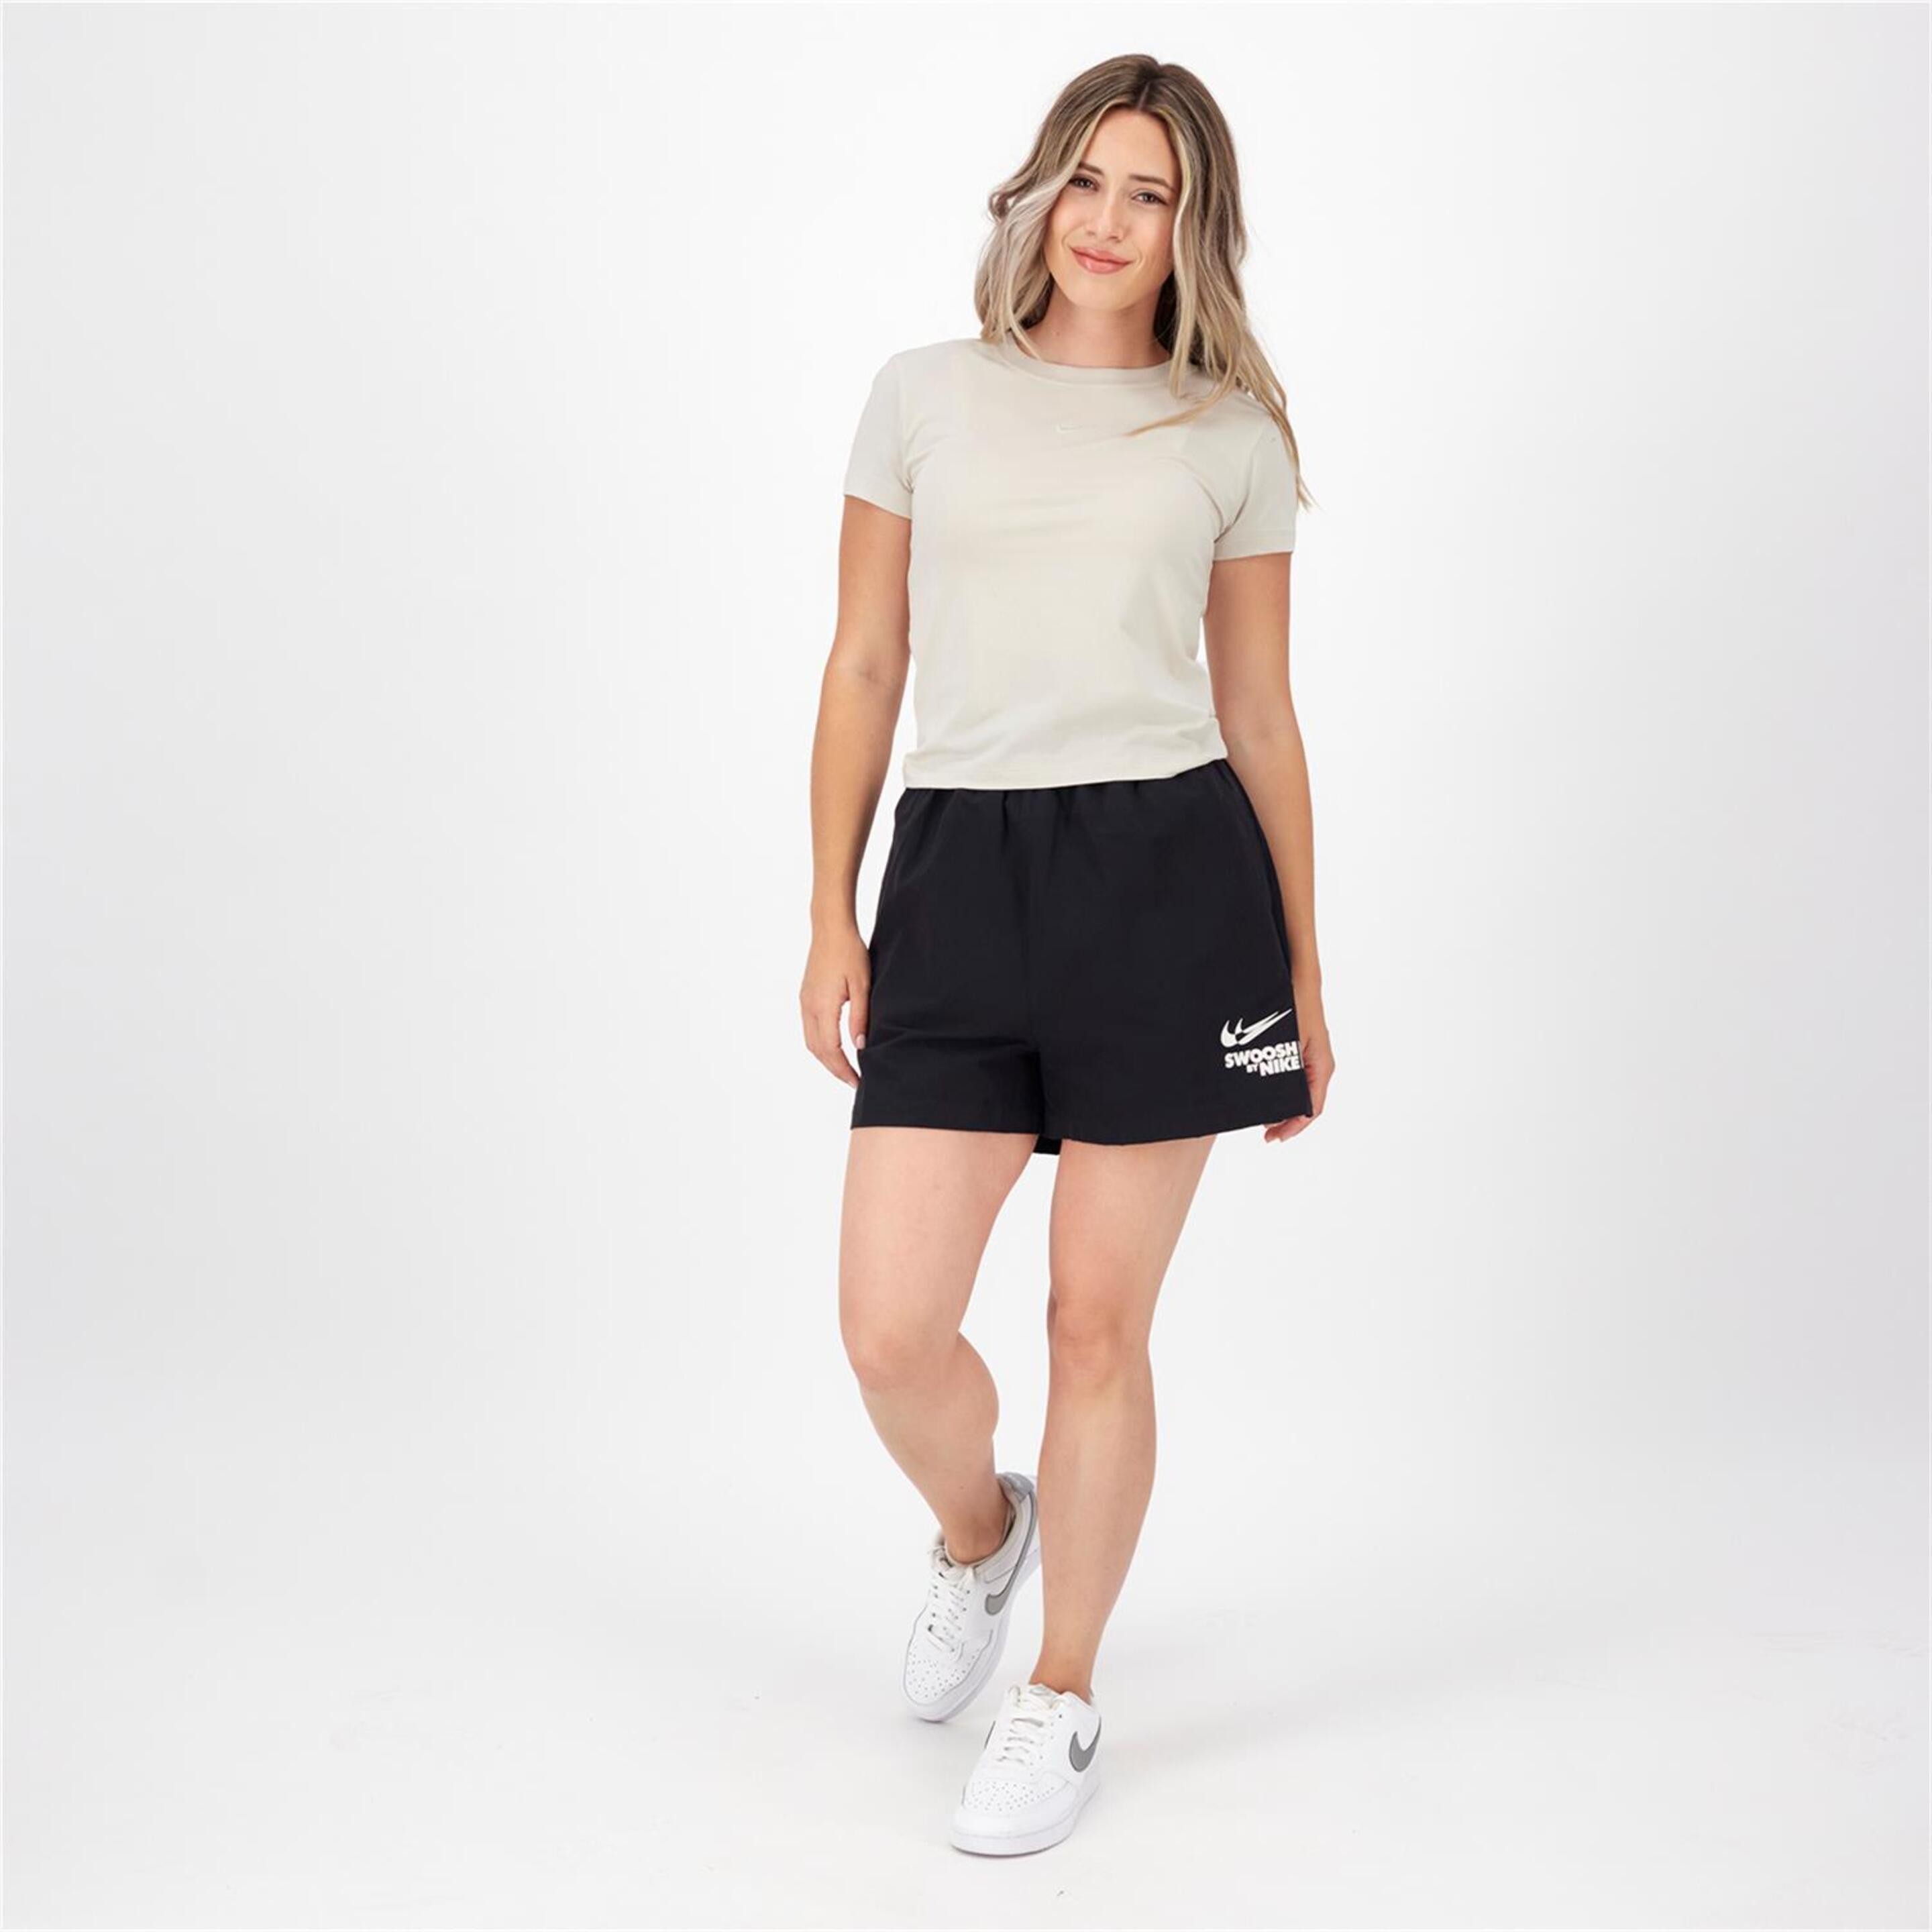 Camiseta Nike - Marrón - Camiseta Mujer